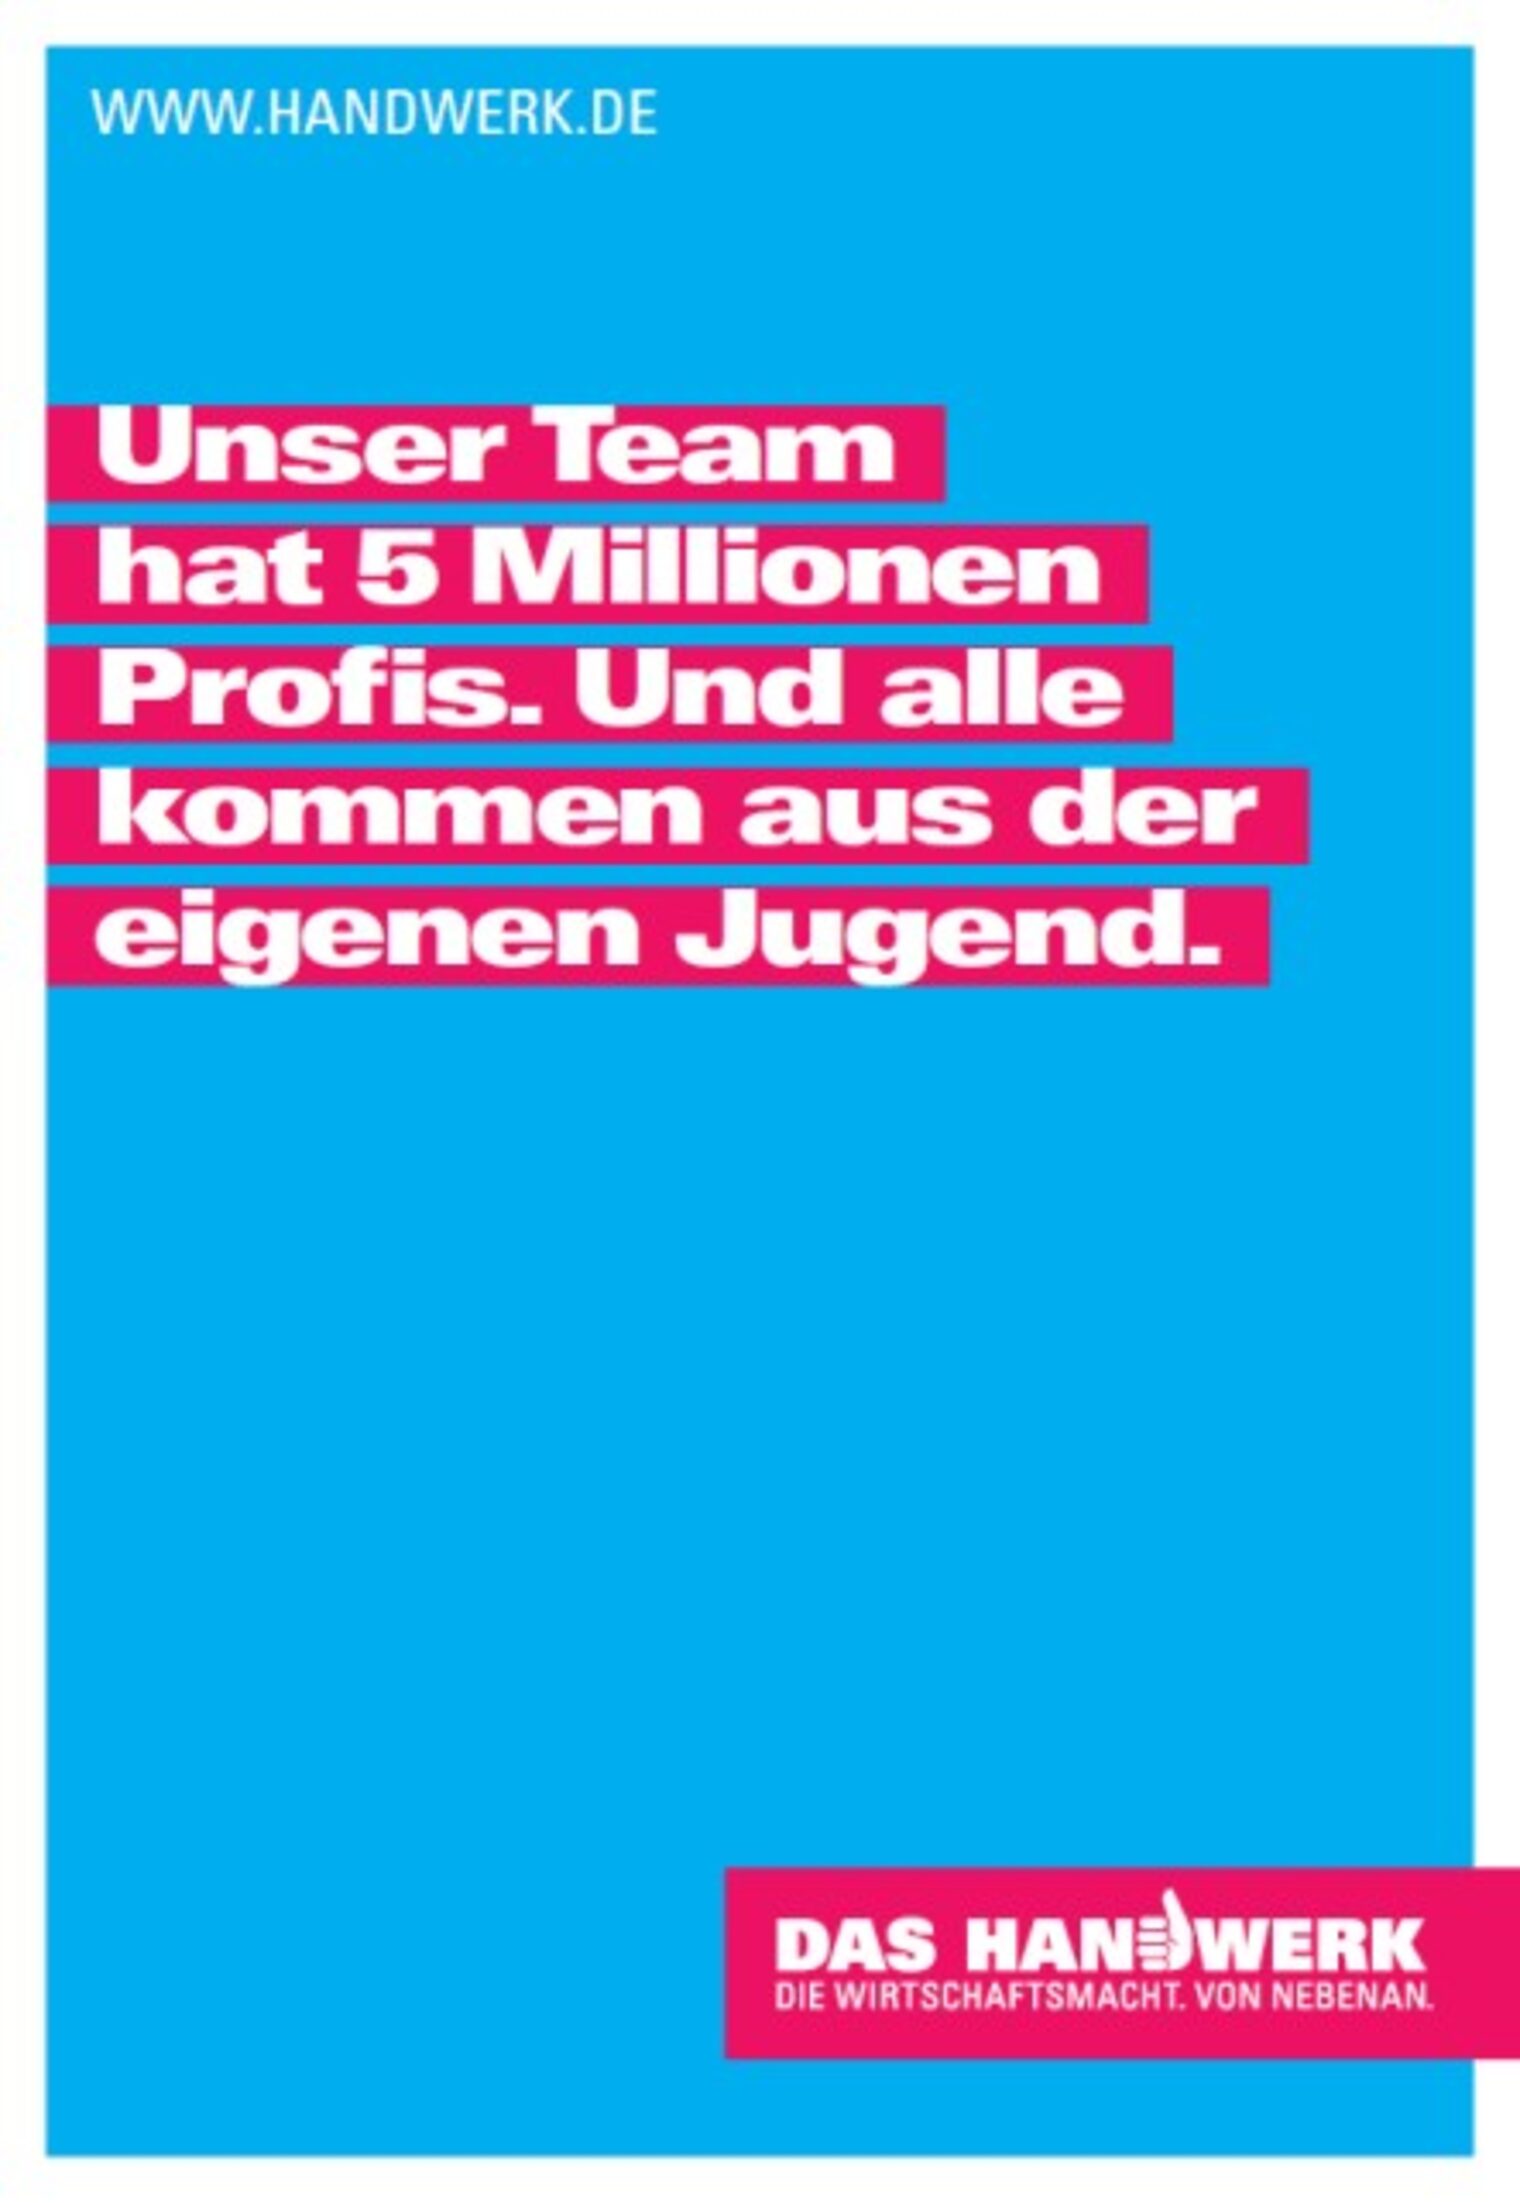 Imagekampagne - Team 5 Mio Profis